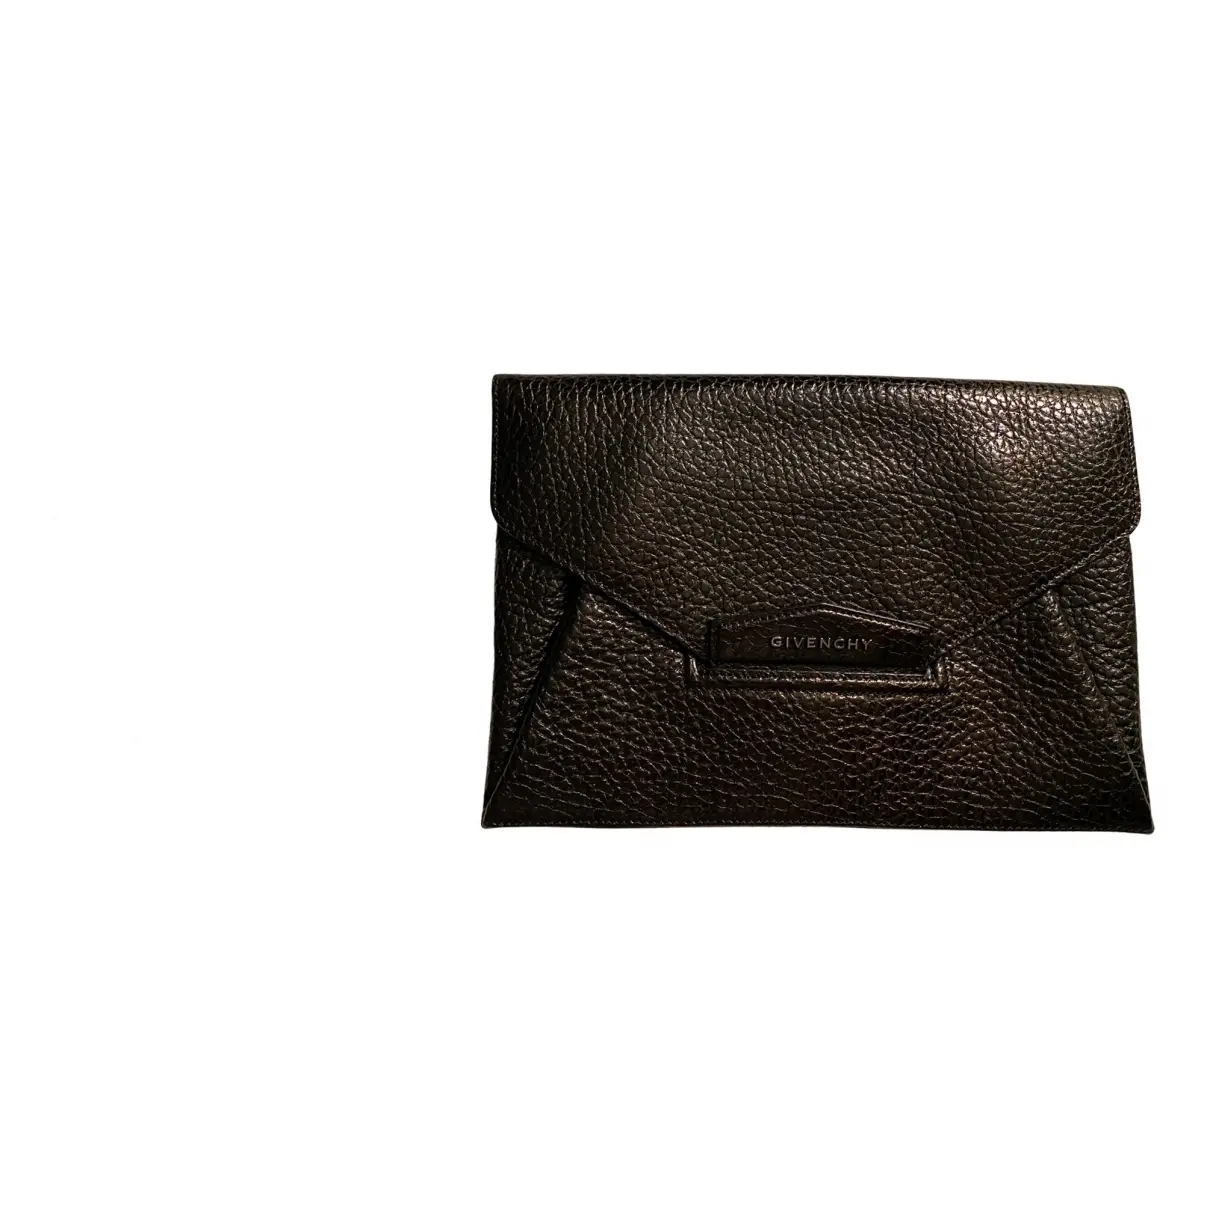 Crocodile clutch bag Givenchy